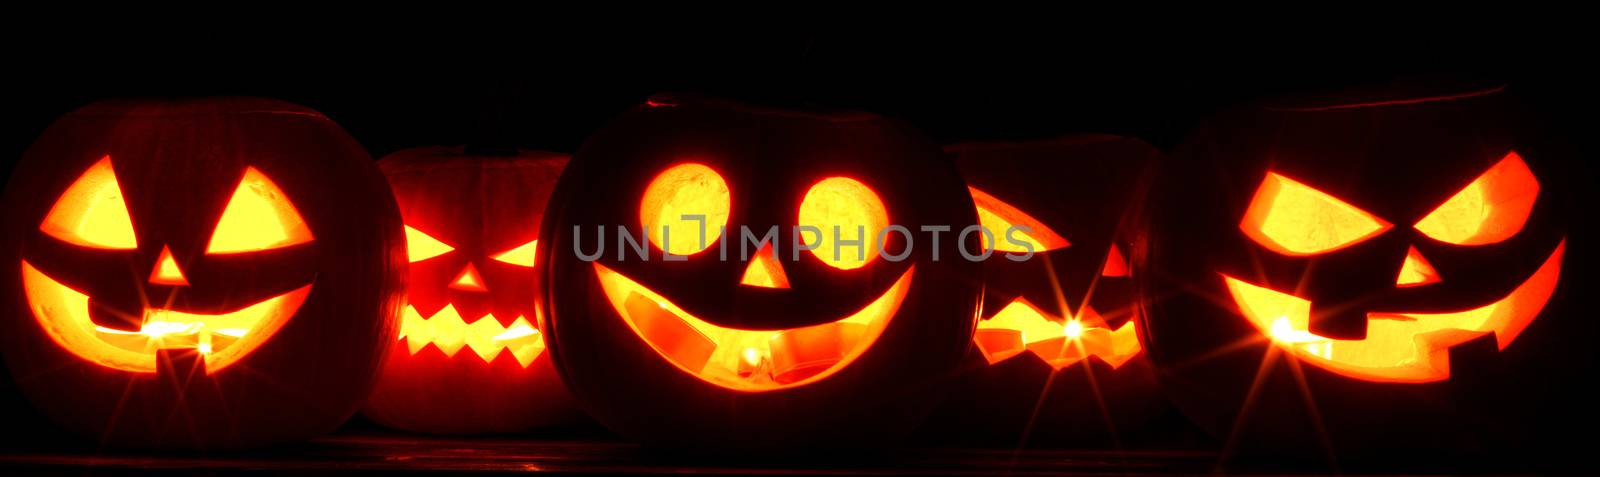 Halloween Pumpkin in a row by Yellowj